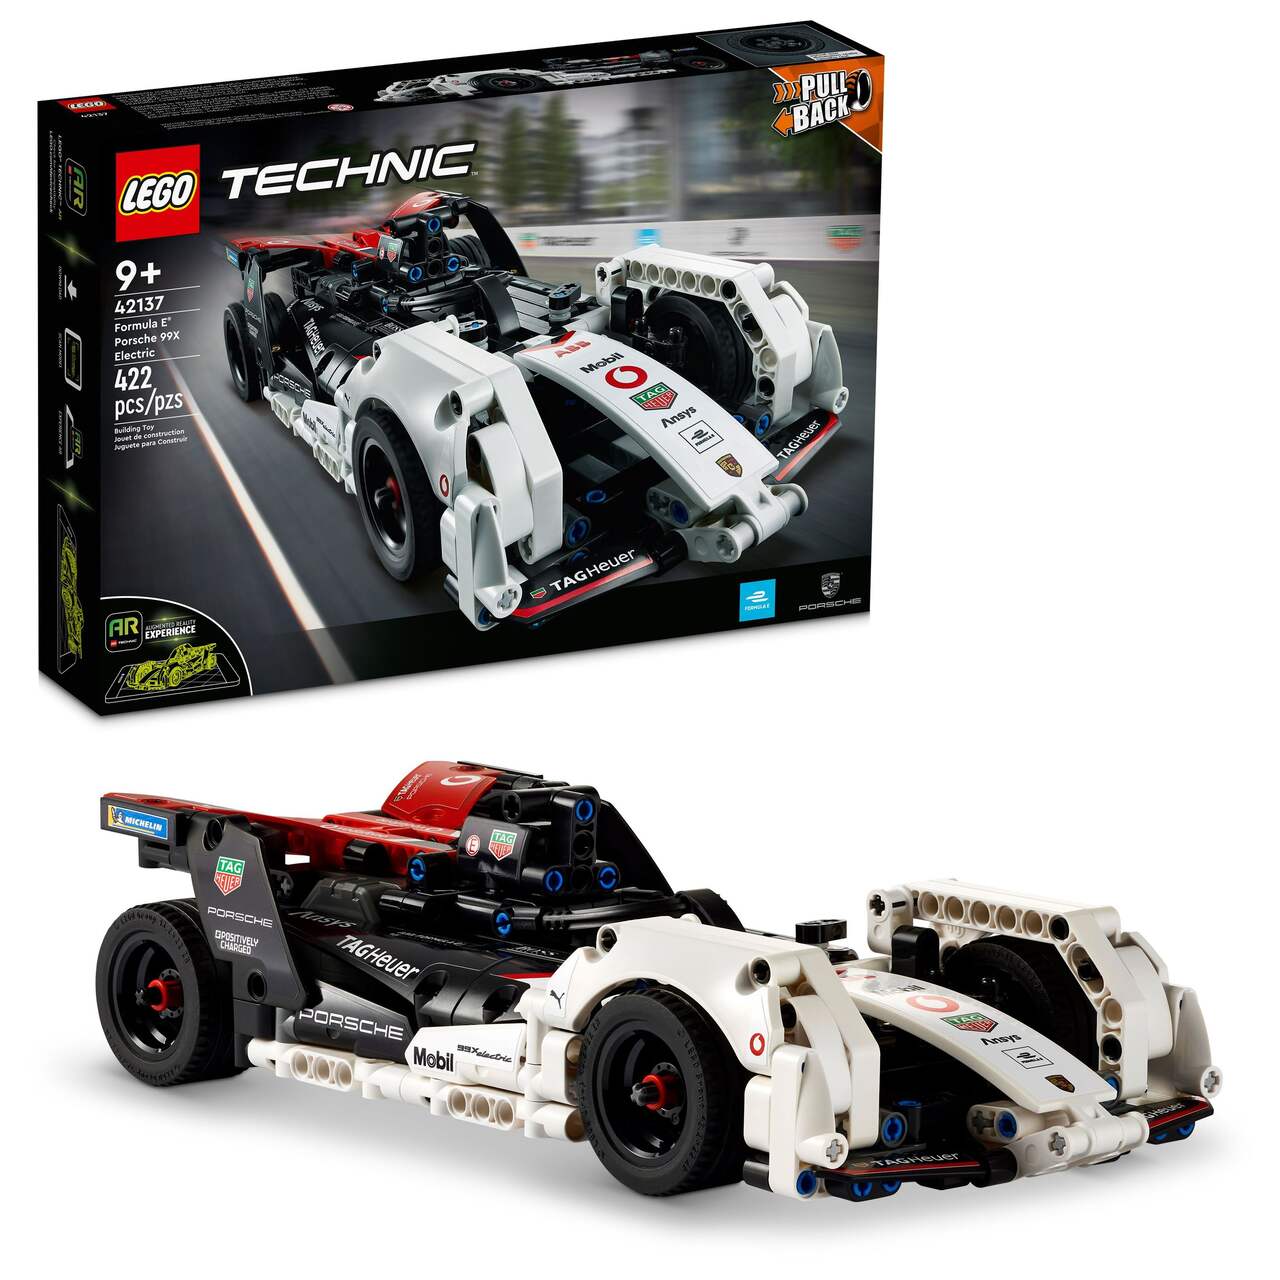 LEGO Technic Voiture Formula E Porsche 99X Electric, 42137